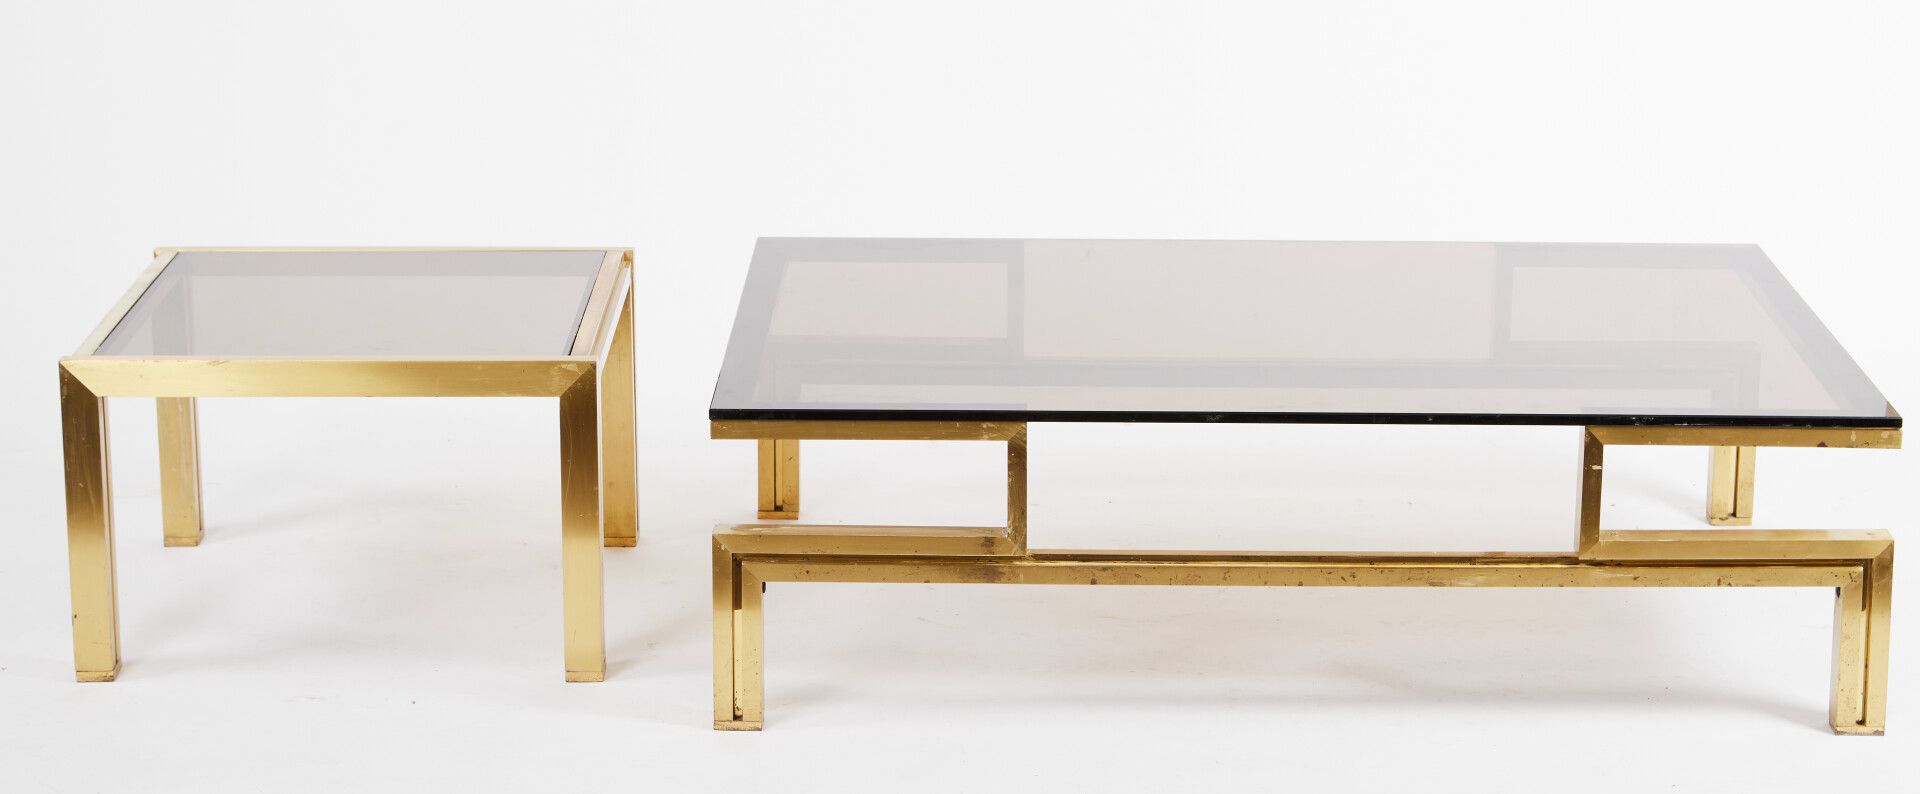 Null 镀金黄铜和烟熏玻璃板的咖啡桌和沙发的末端。

约1975年。

34 x 120 x 80厘米和35 x 54 x 56厘米